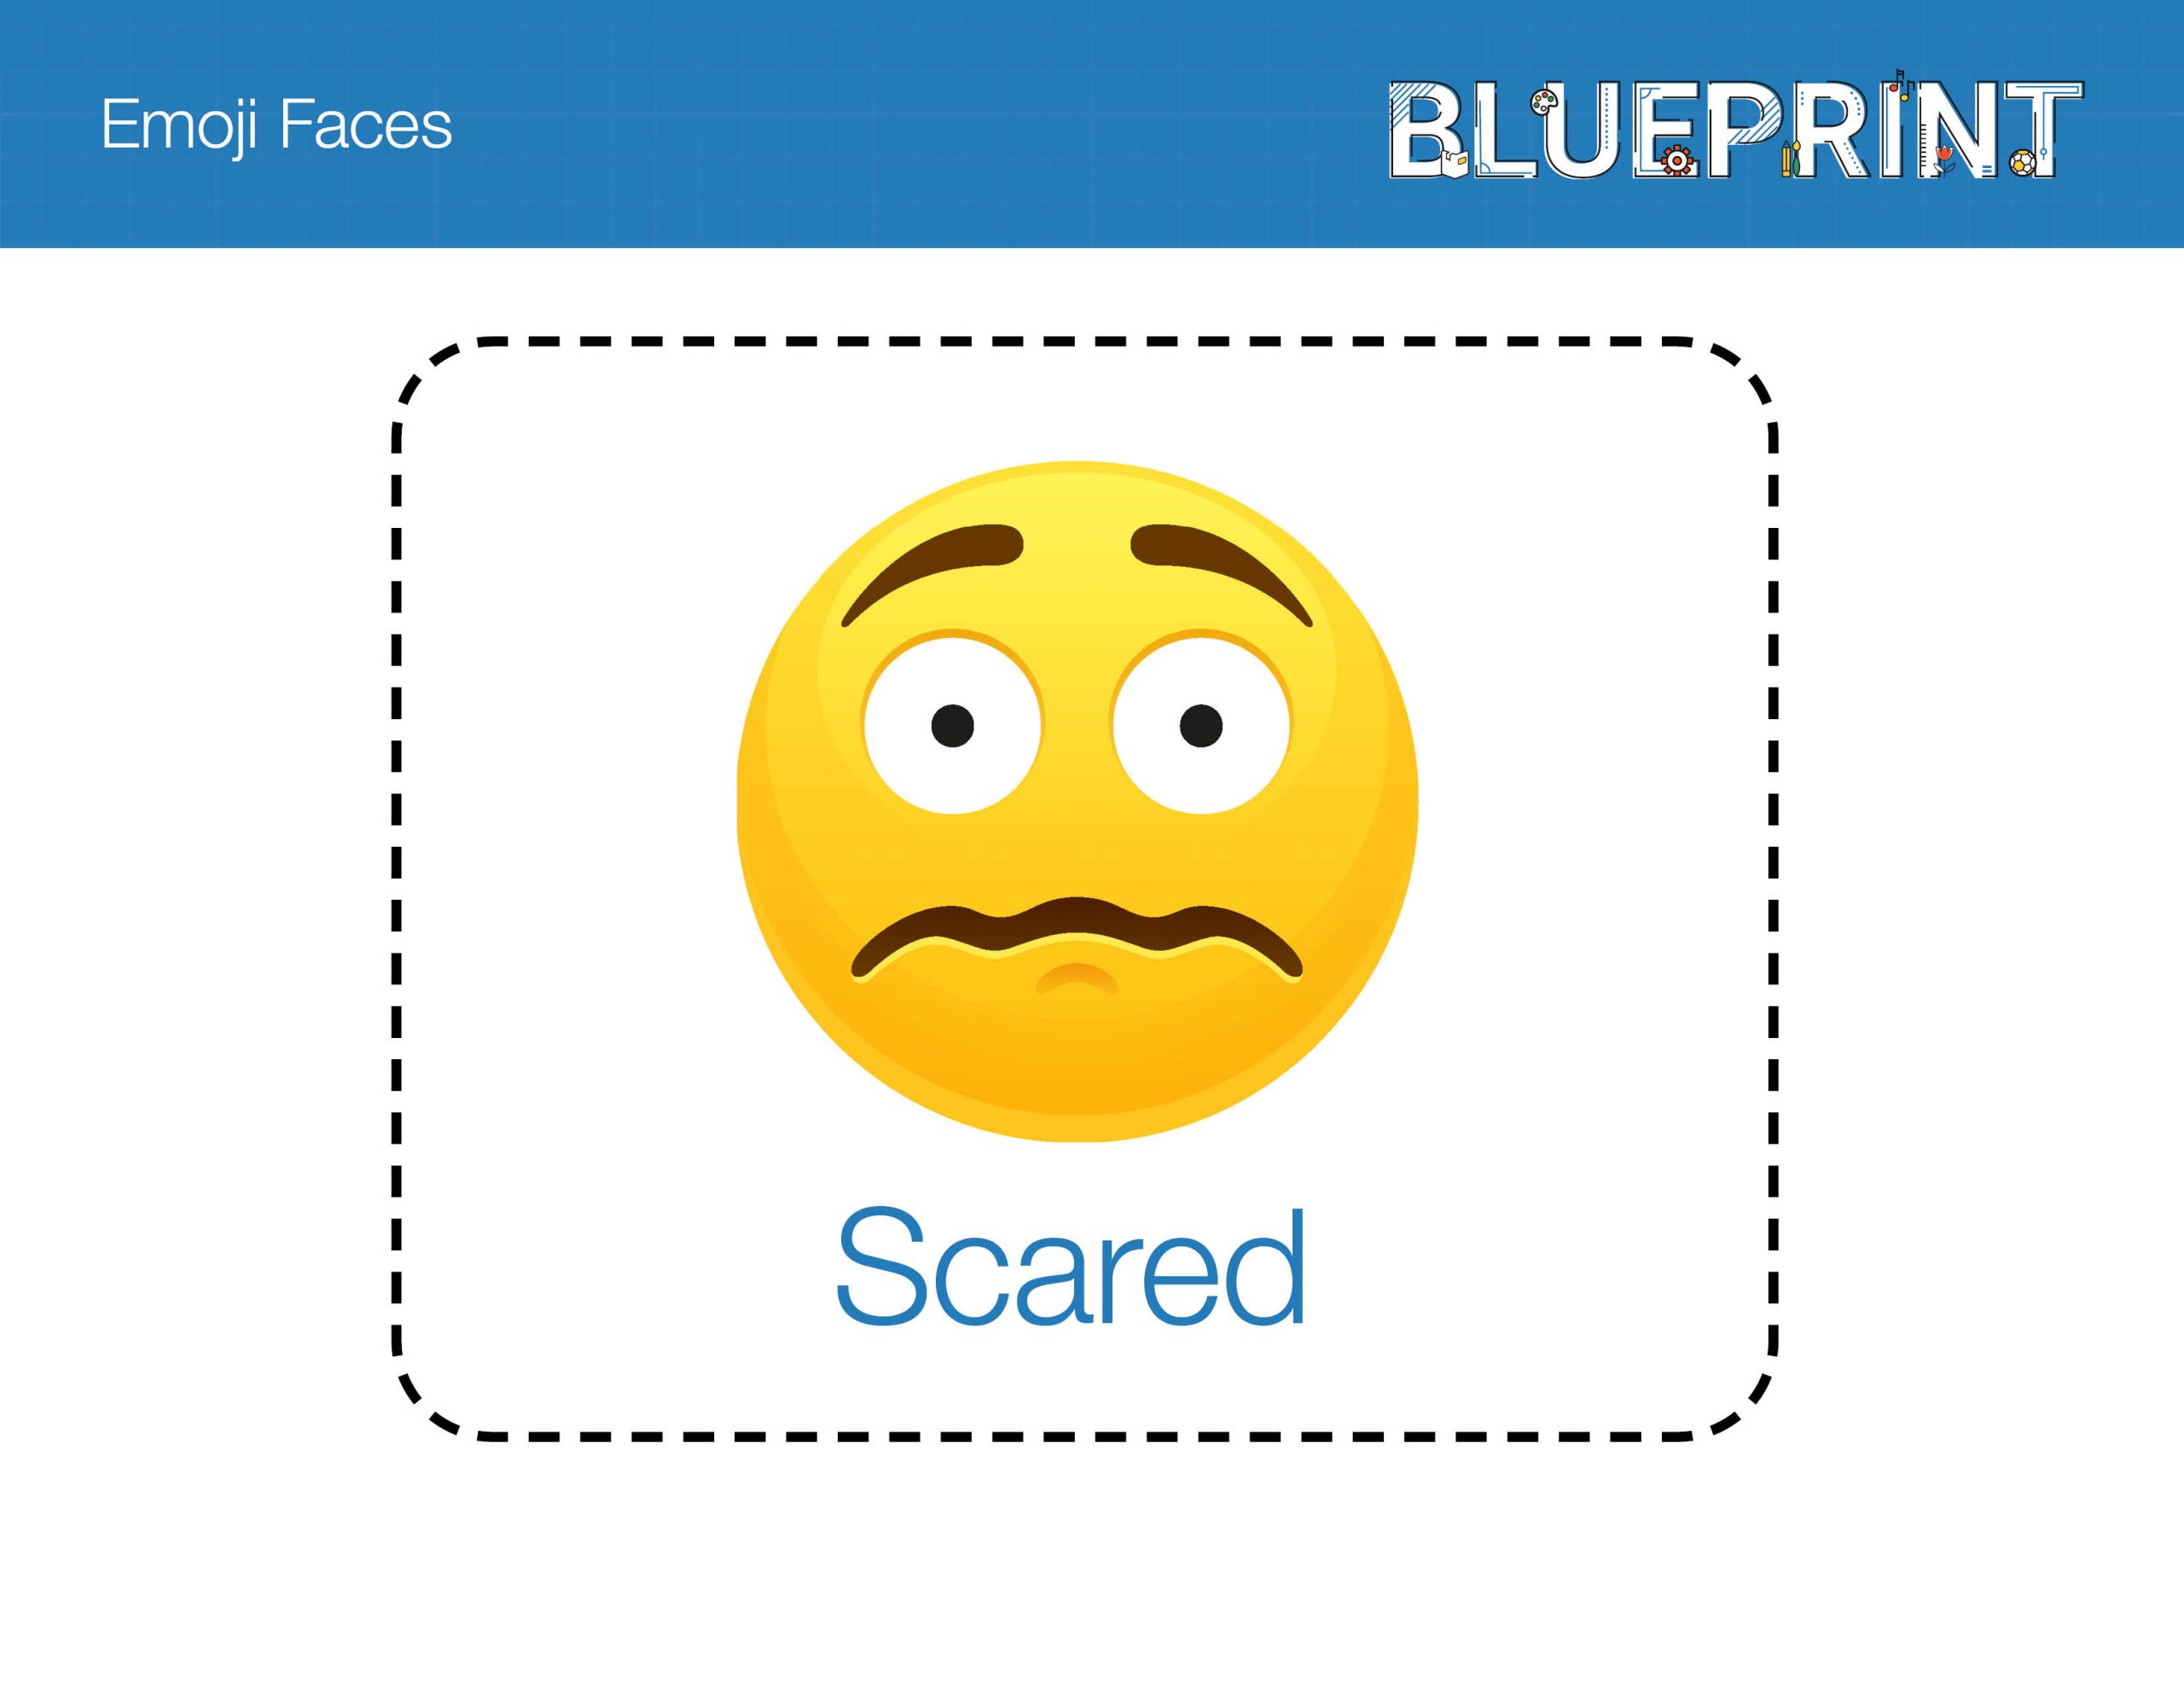 Emoji Faces - Scared